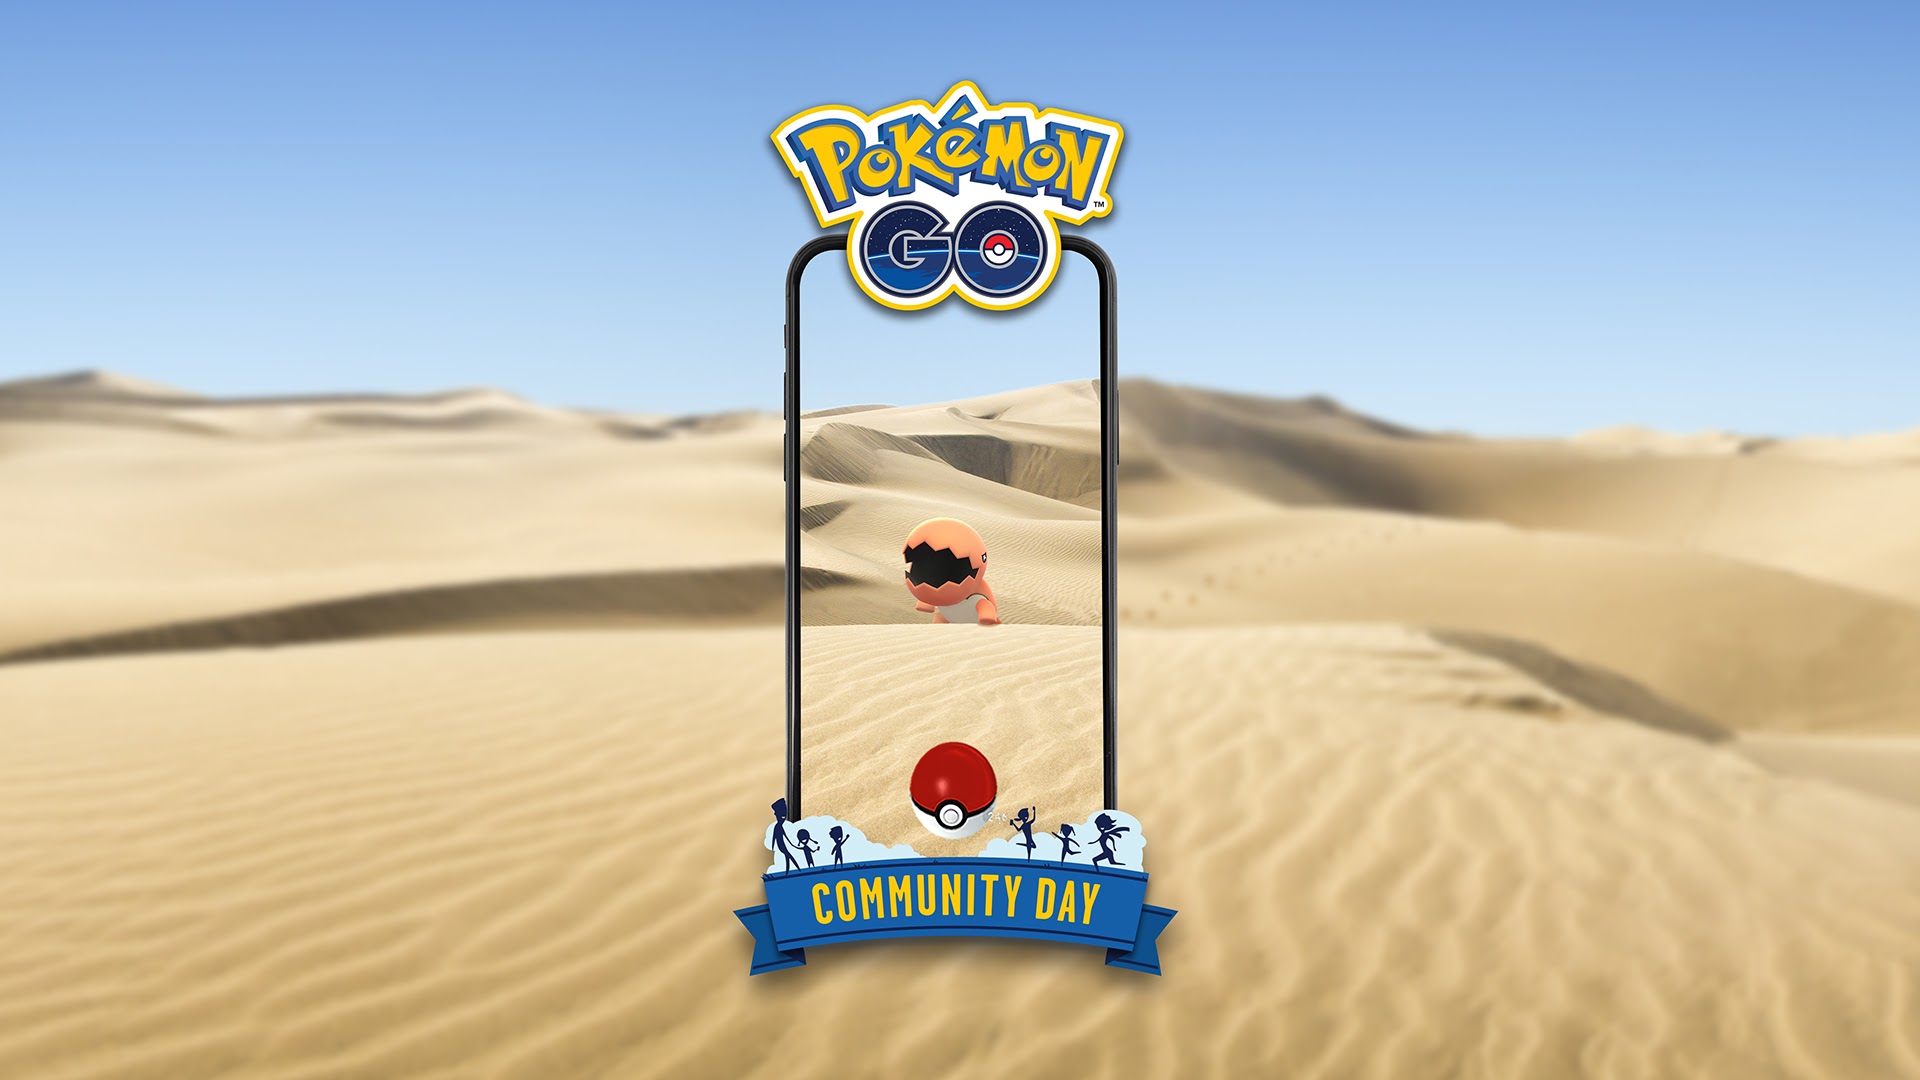 Hari Komunitas Pokemon Go berikutnya akan diadakan pada 12 Oktober dan menampilkan Trapinch